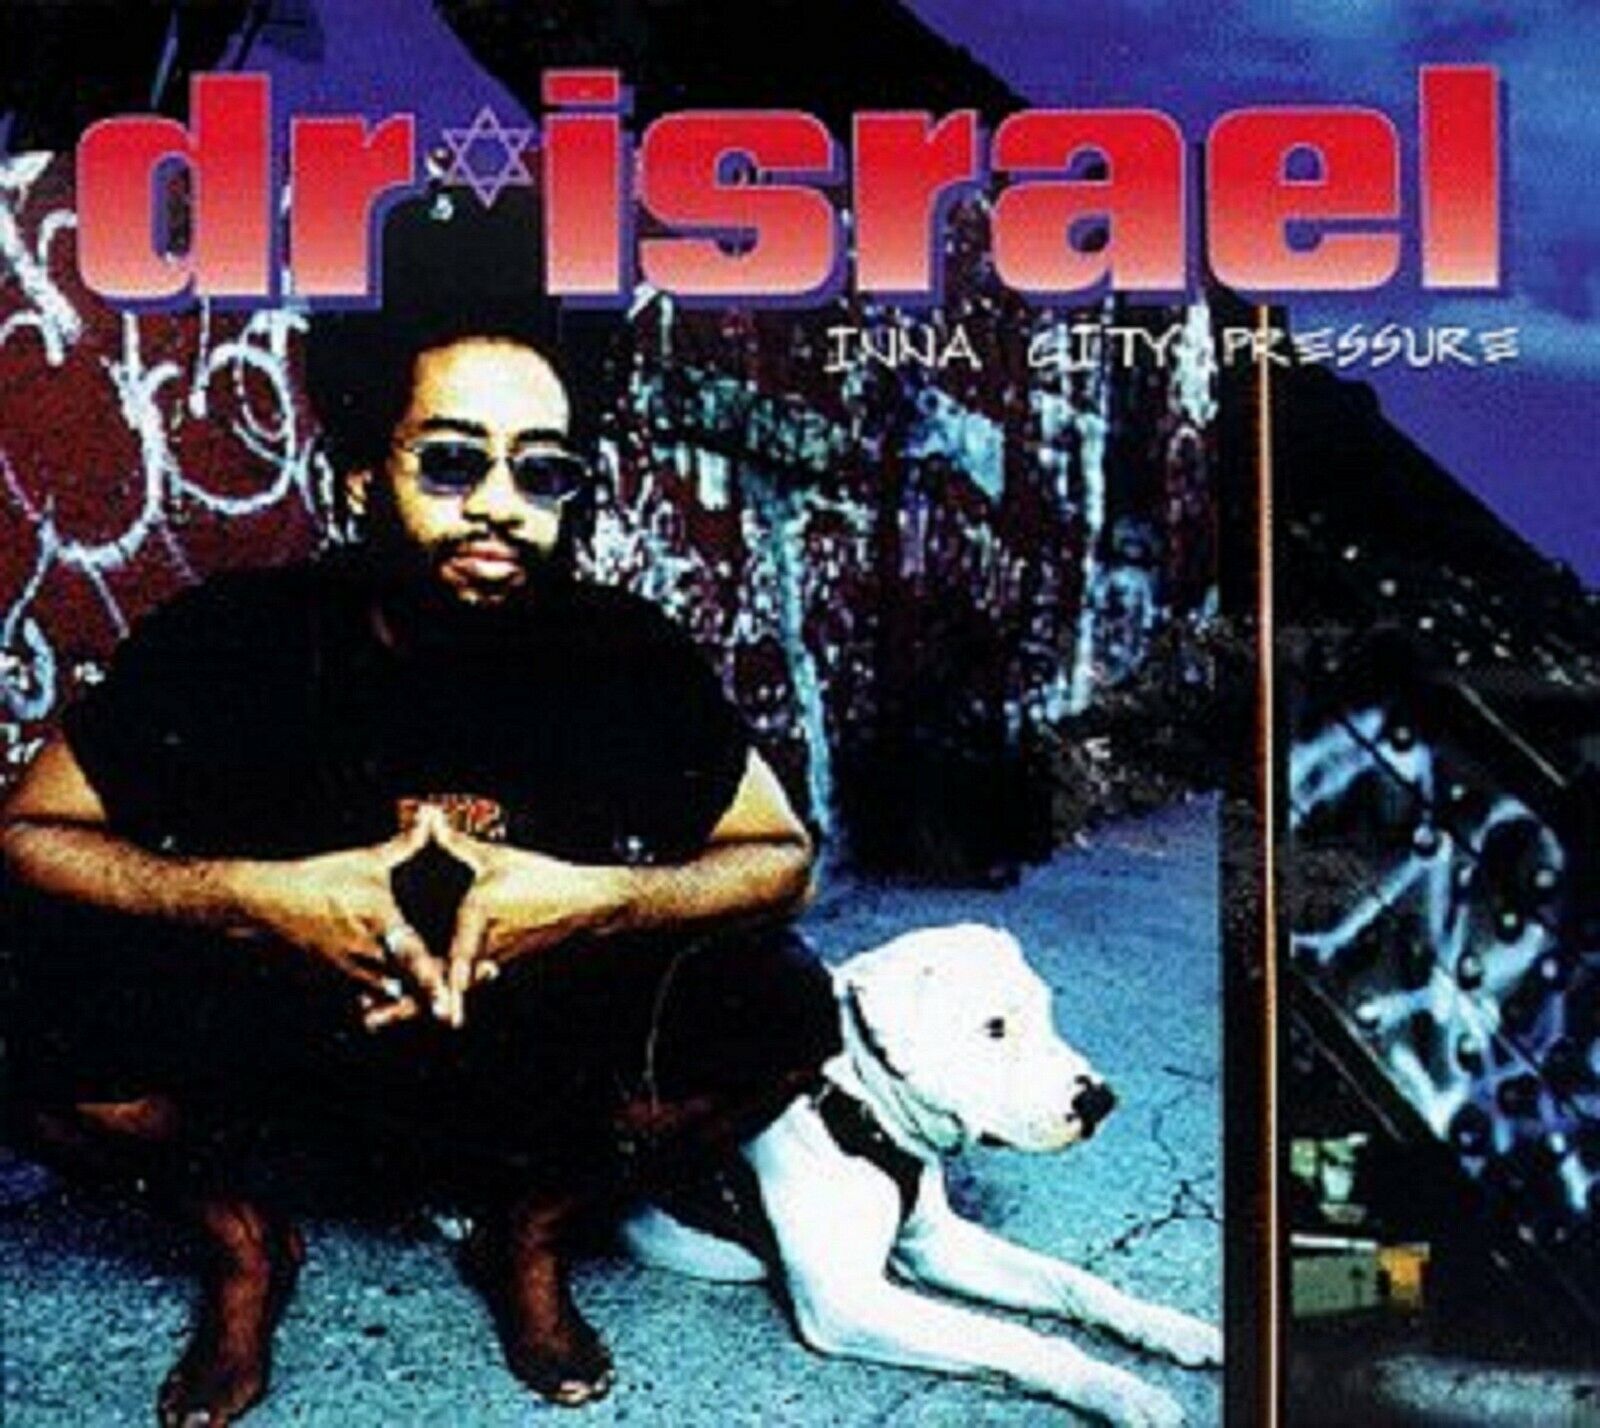 Inna City Pressure By Dr. Israel ,Music CD